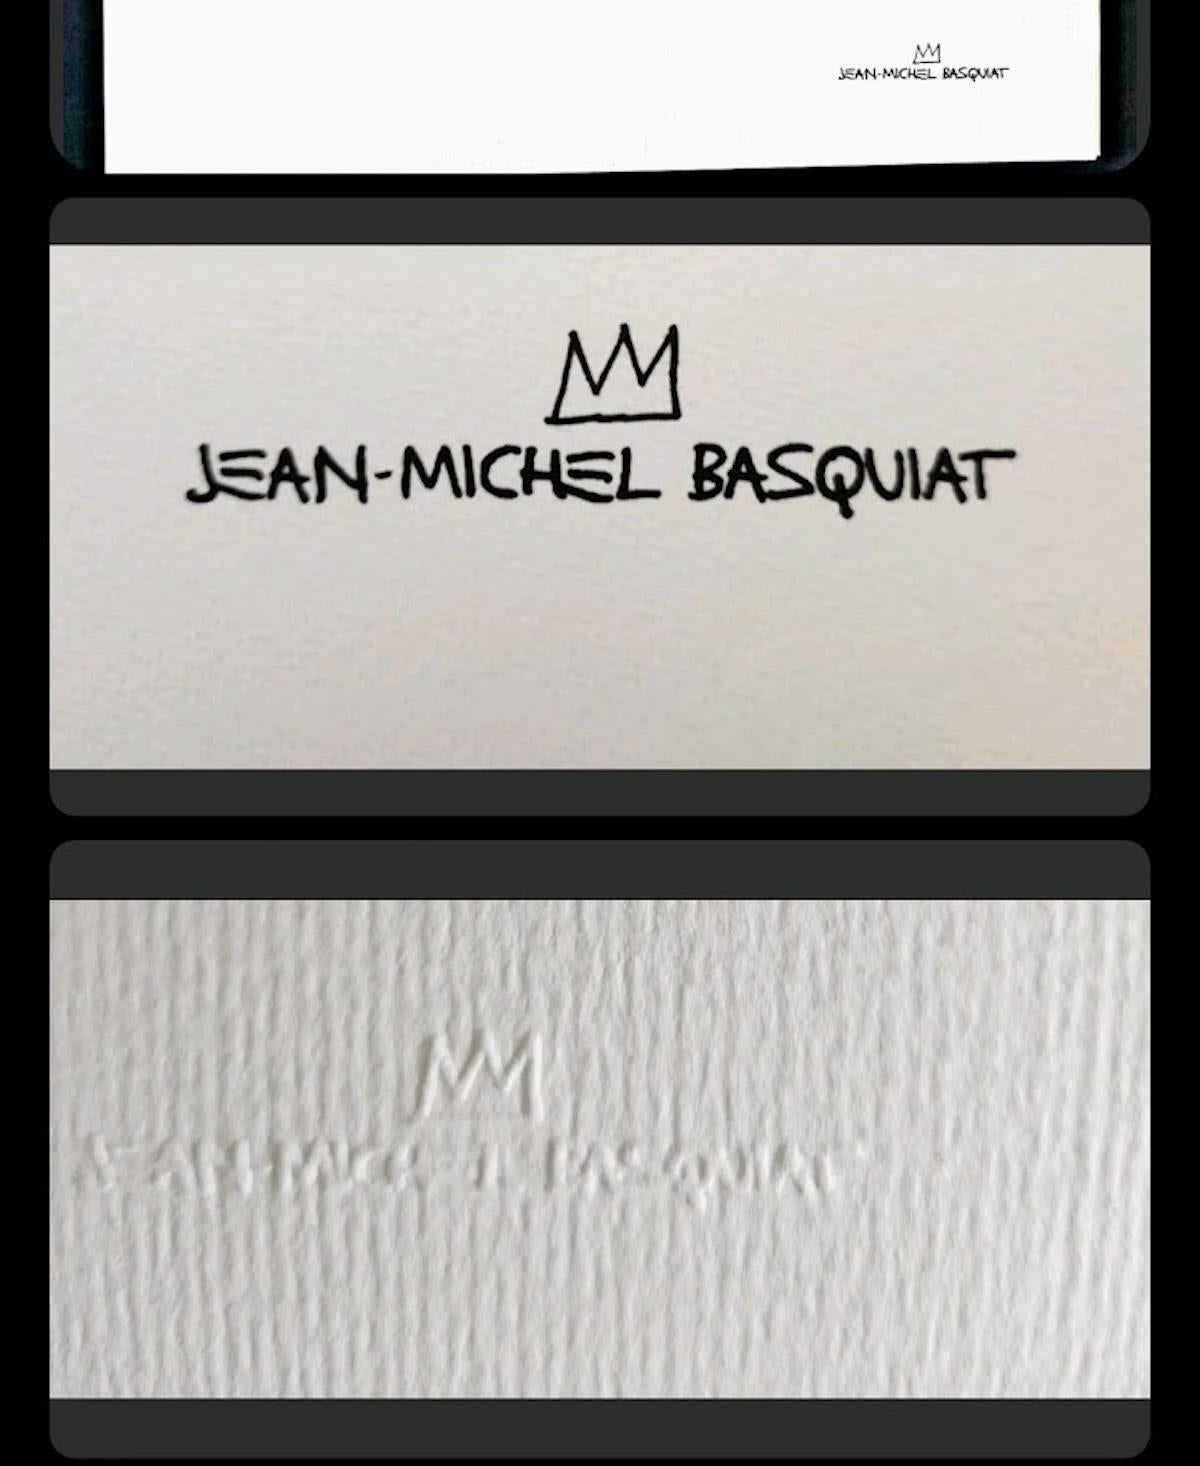 jean-michel basquiat lithograph